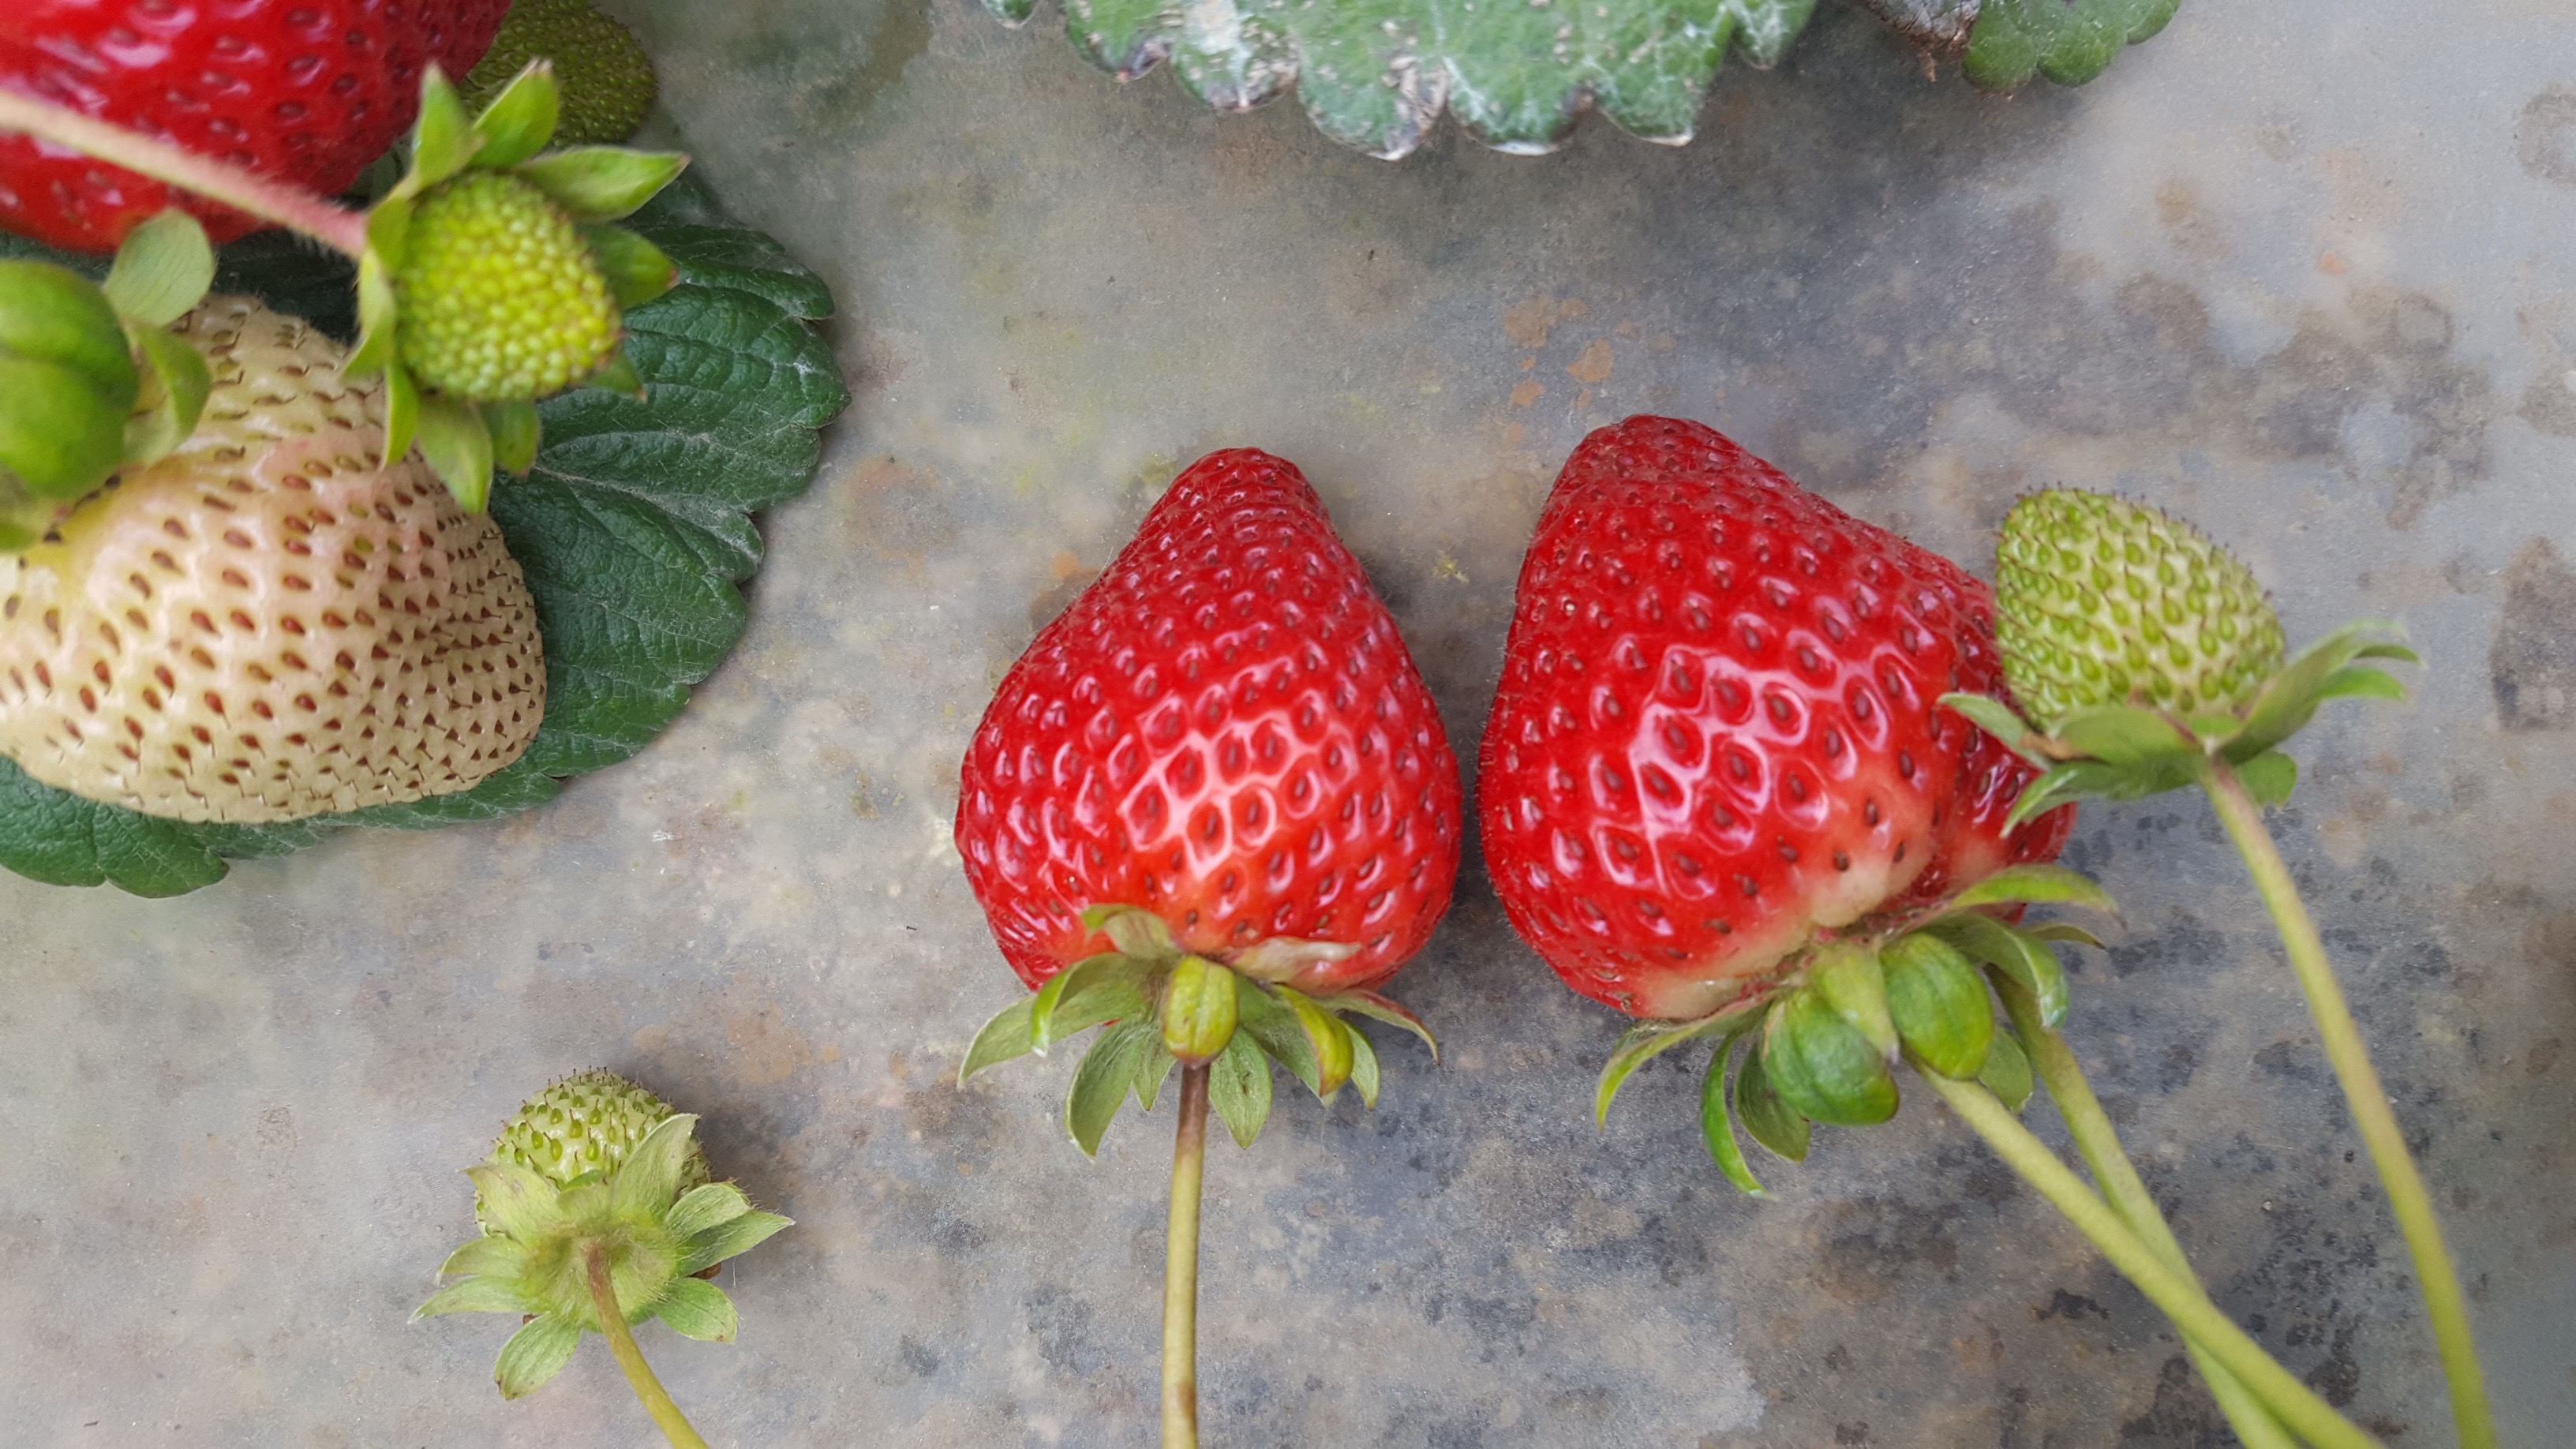 Albion strawberry